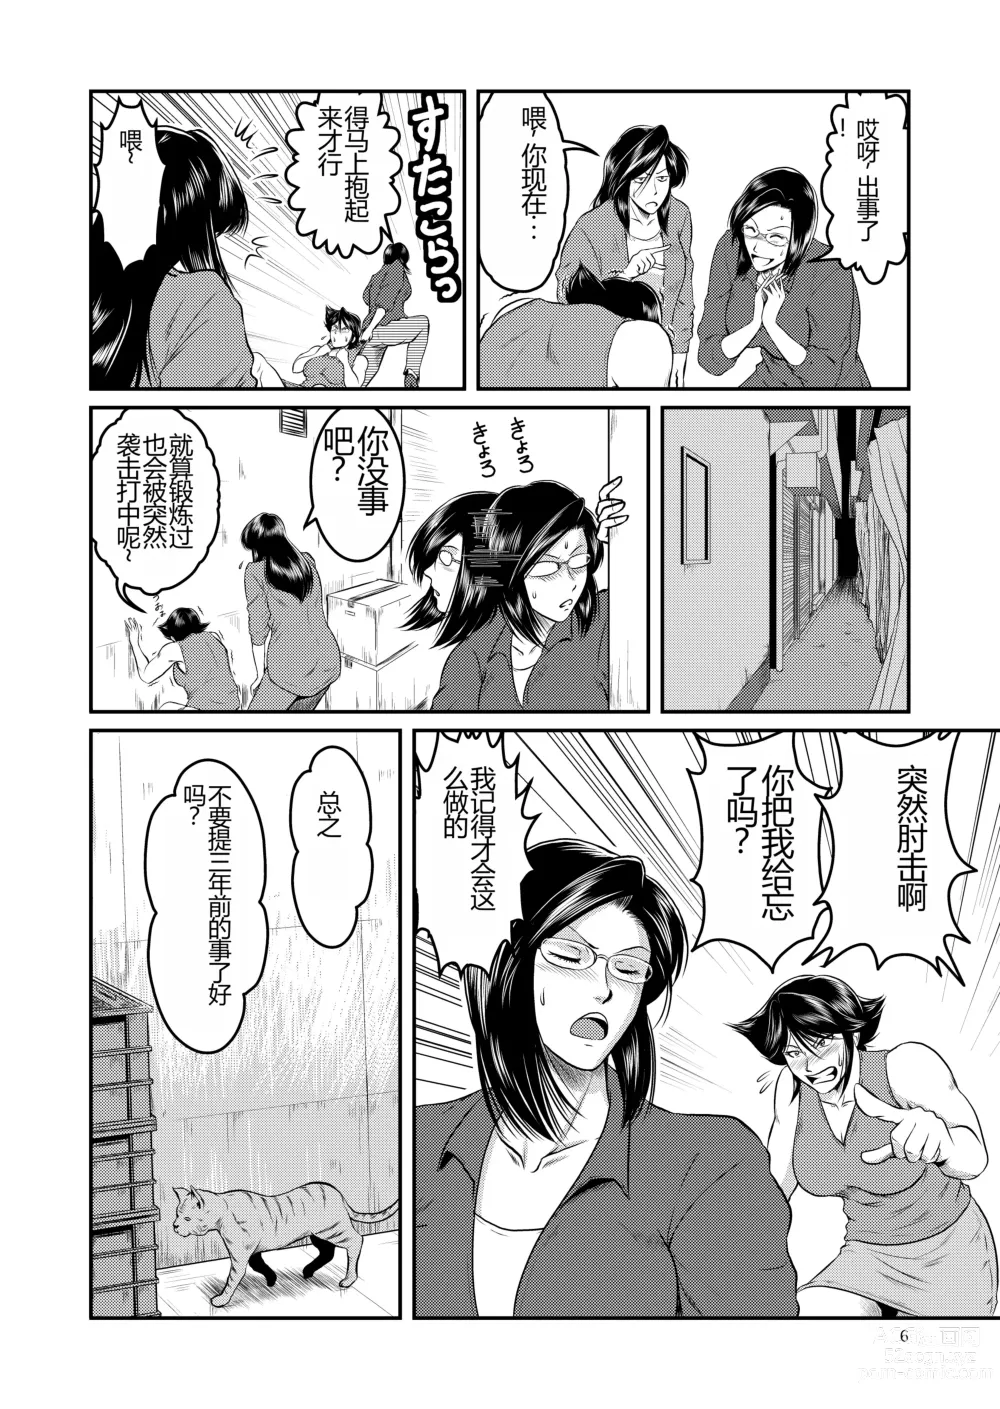 Page 6 of doujinshi Bitch & Slave & Analmania